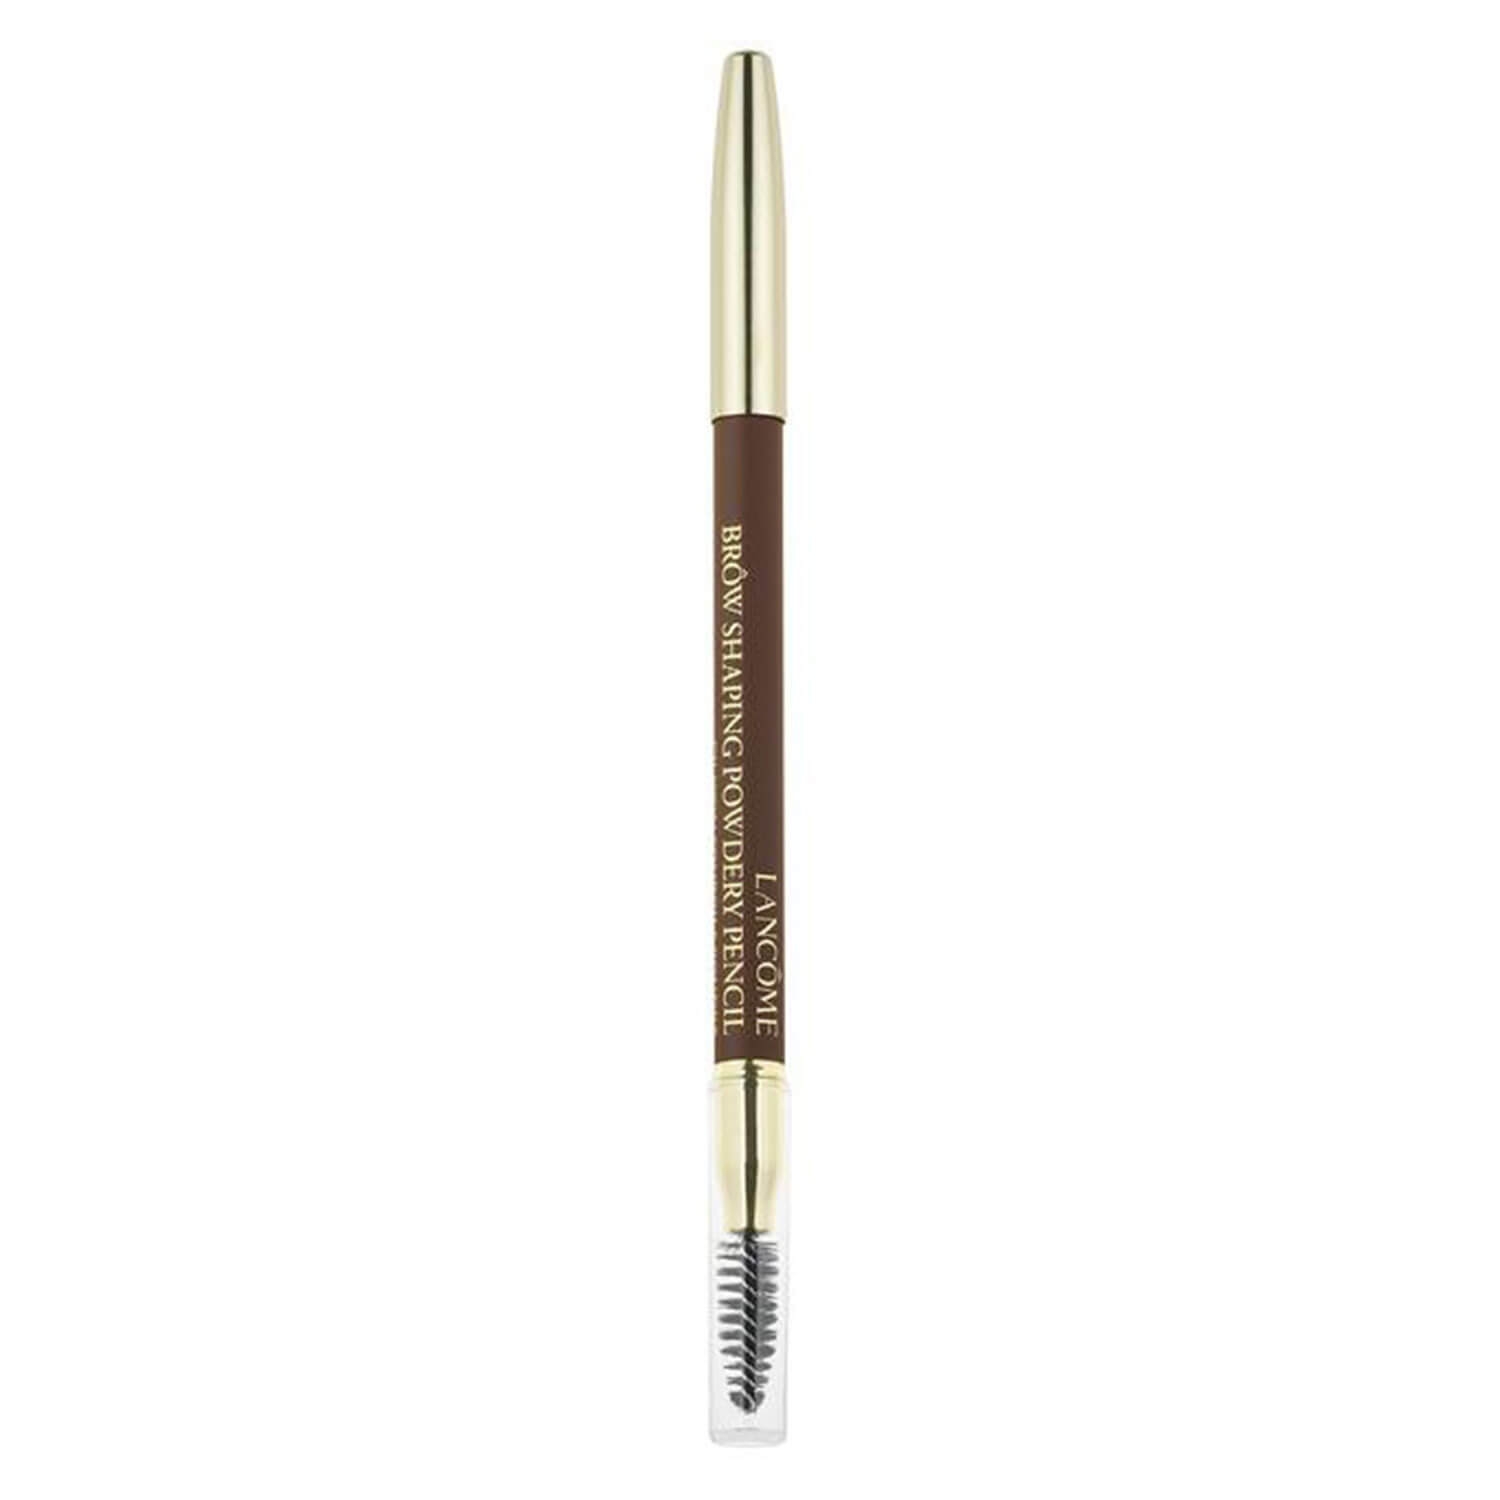 Produktbild von Lancôme Brows - Brow Shaping Powdery Pencil 05